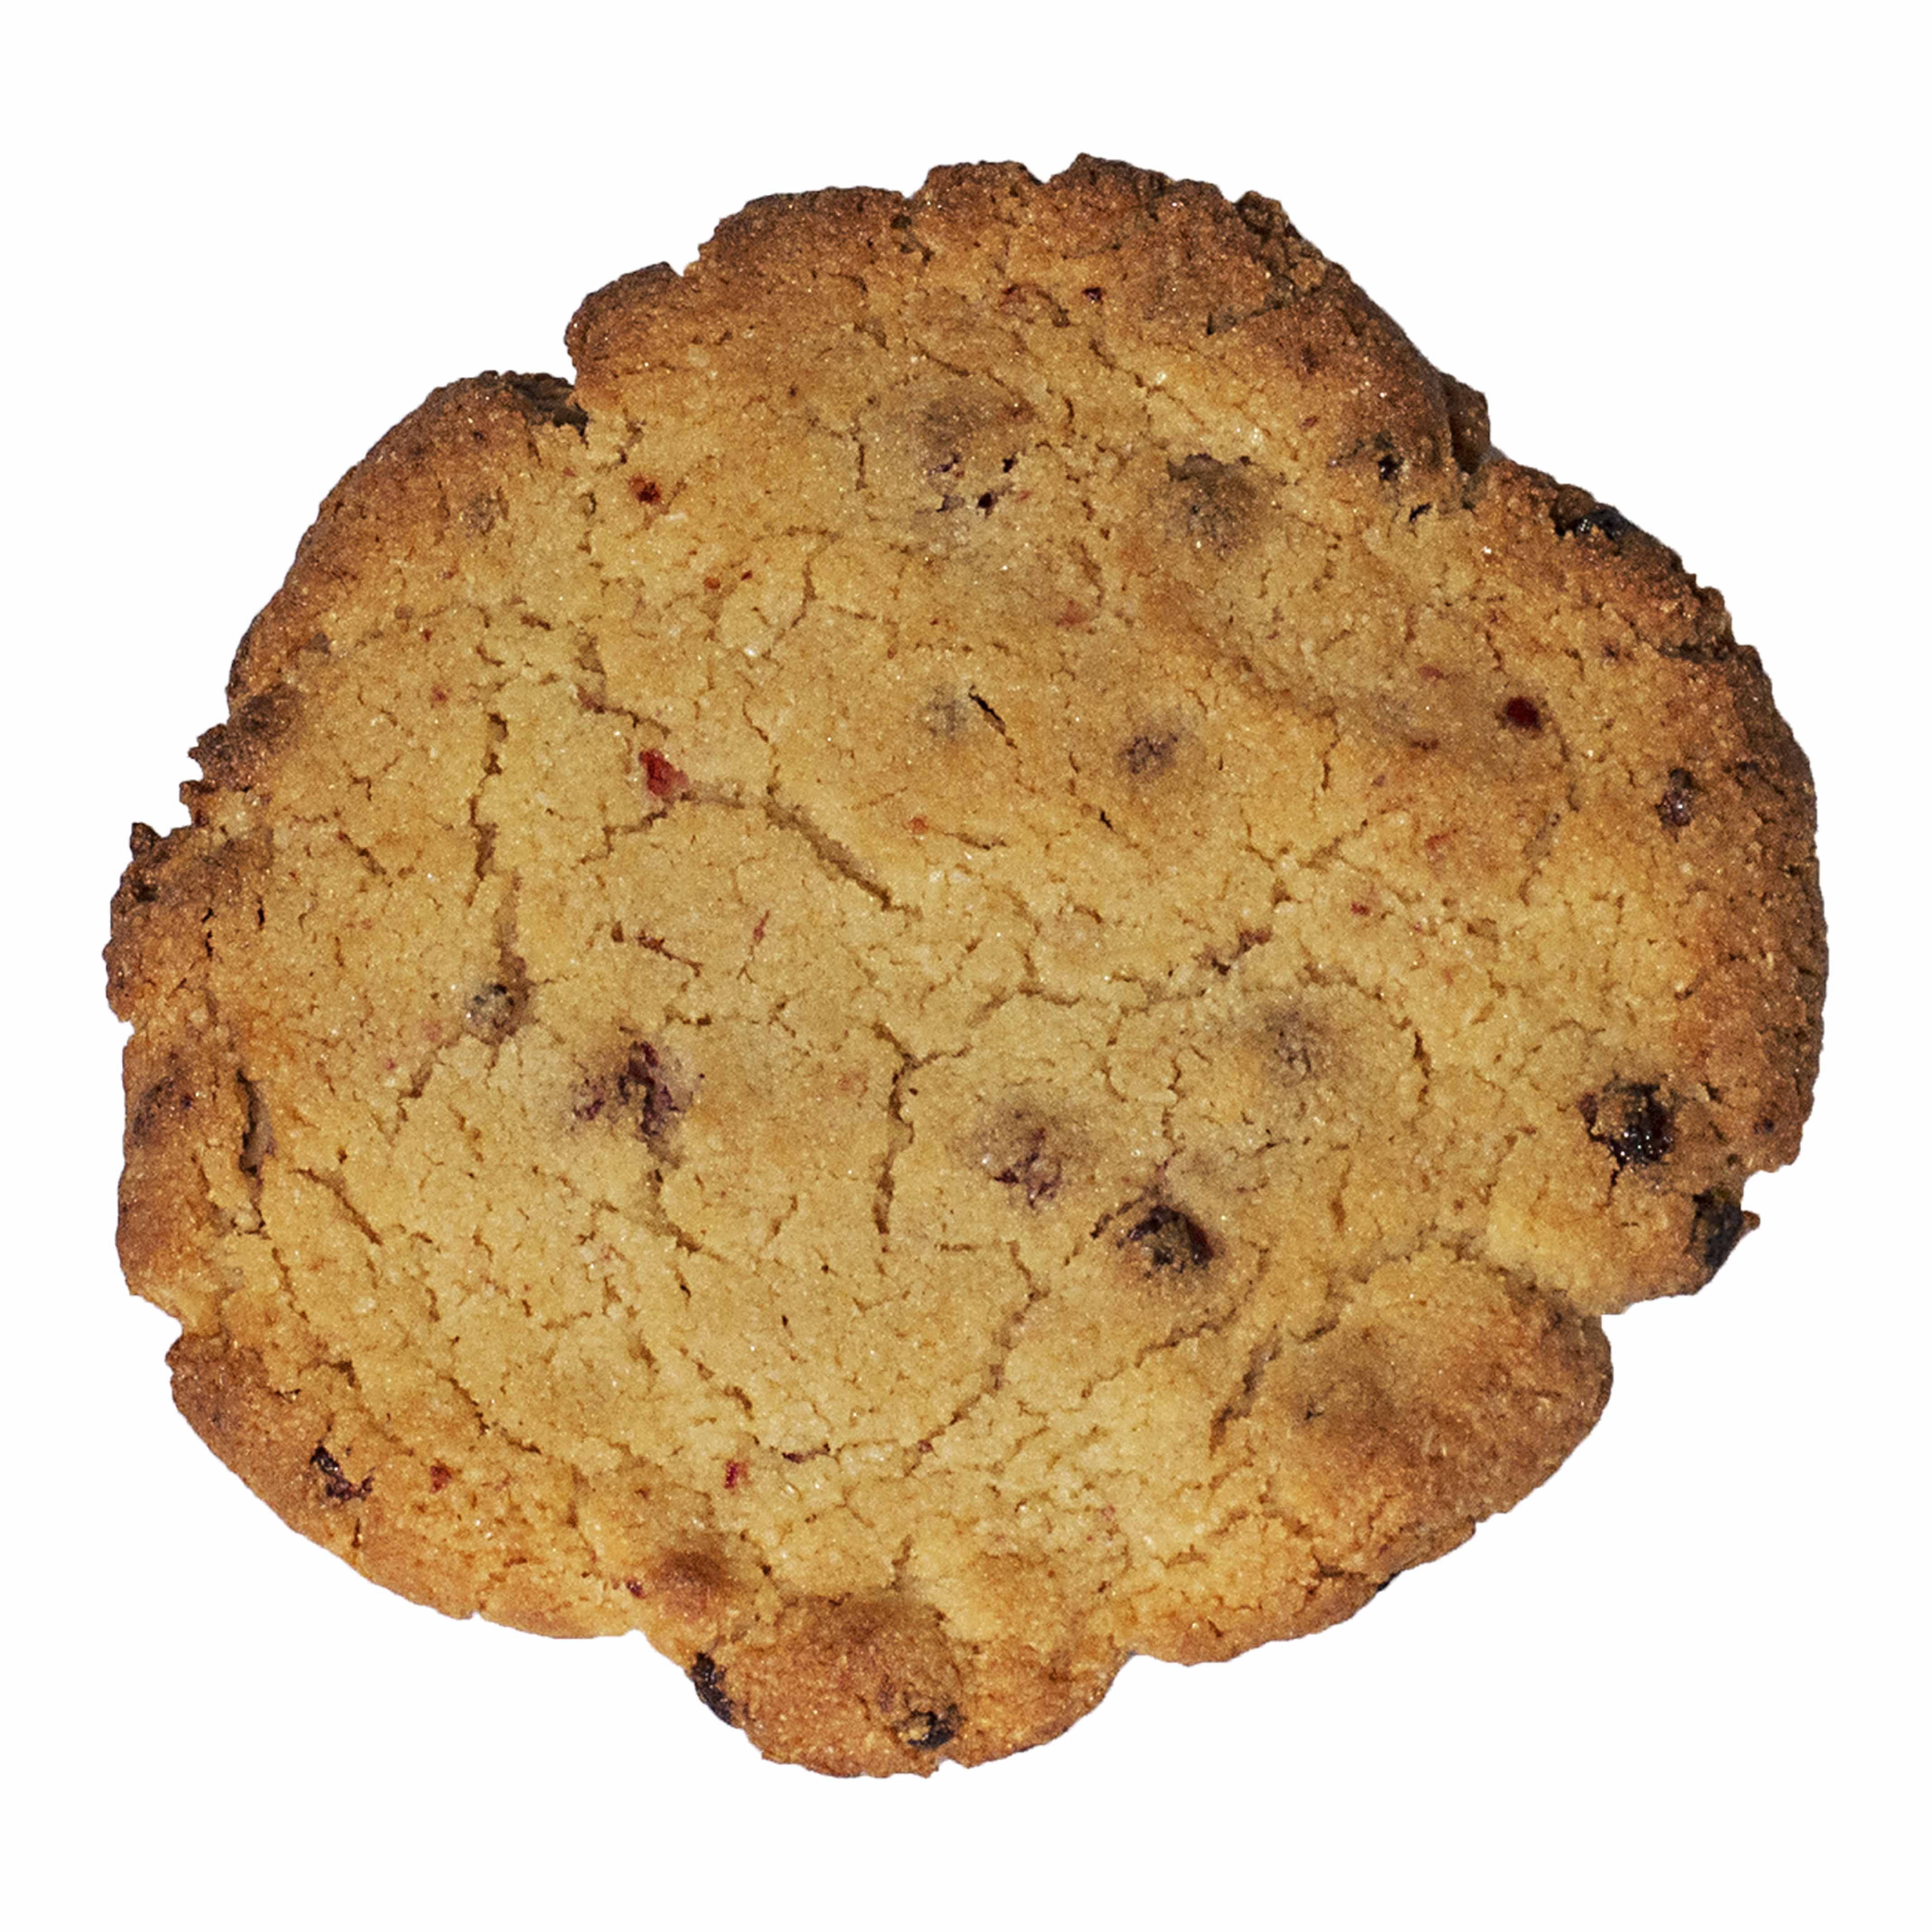 Johannisbeer-Cookie glutenfrei